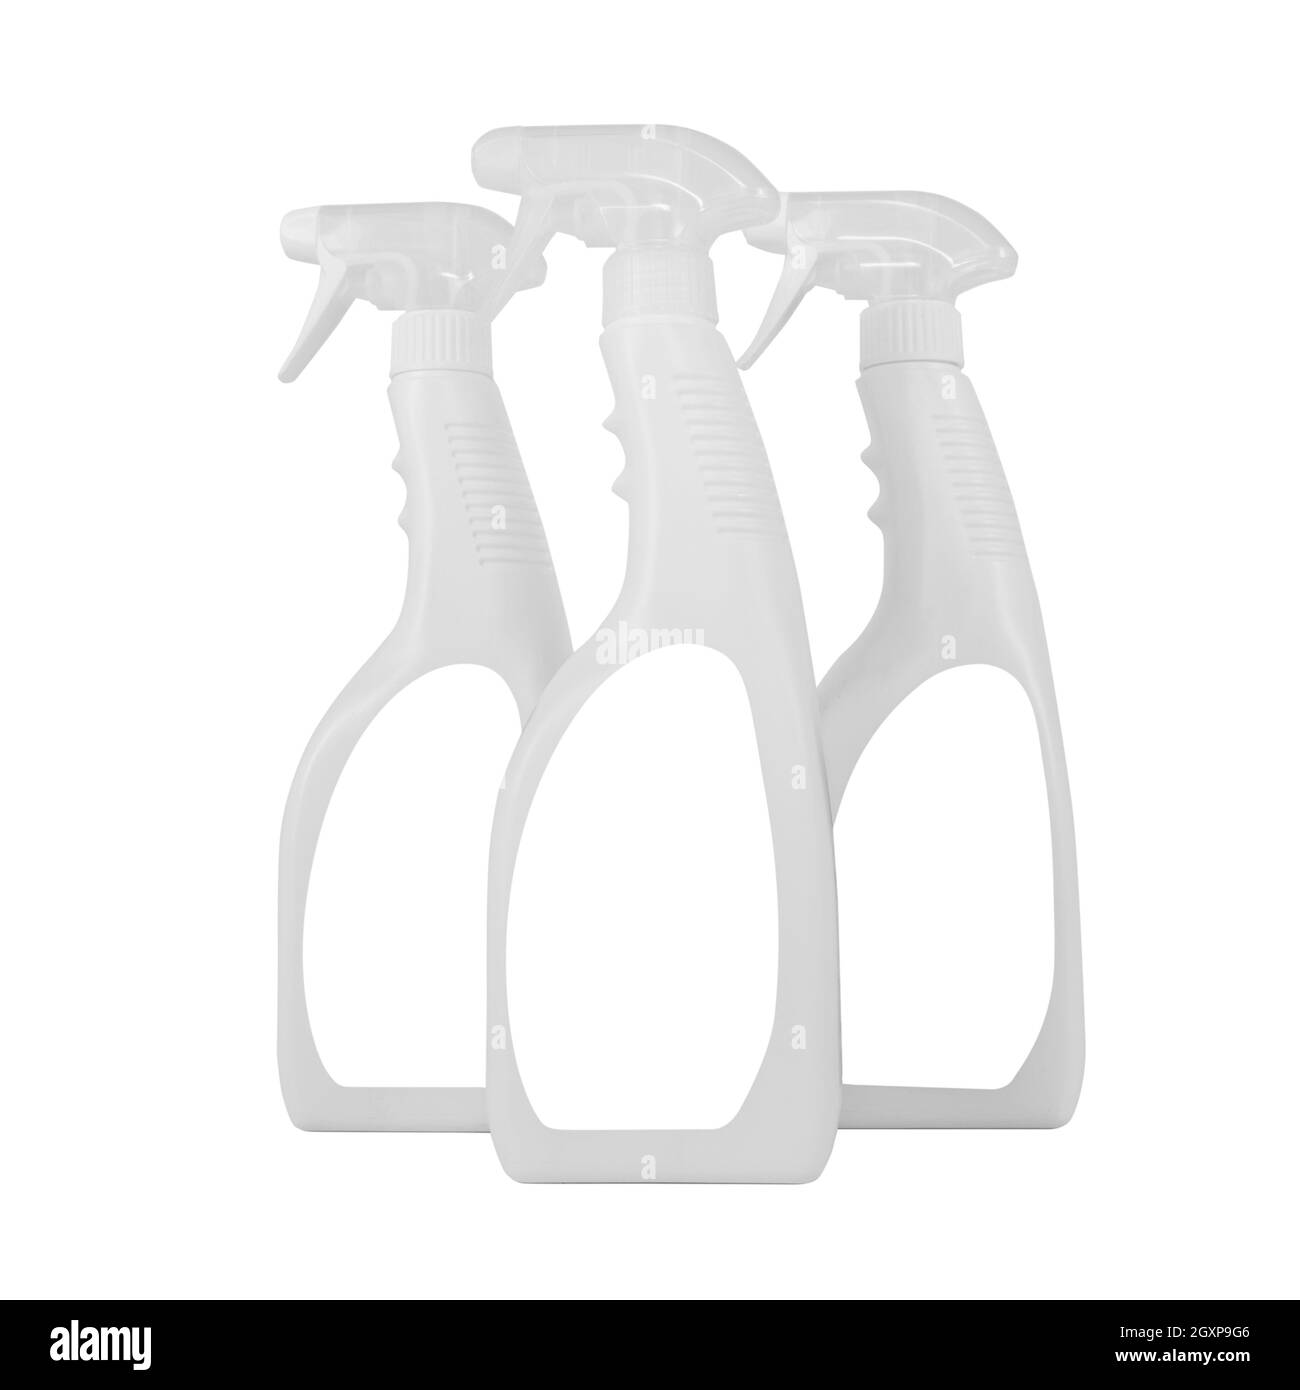 Three sanitary spray plastic bottles on a white background with white label Stock Photo